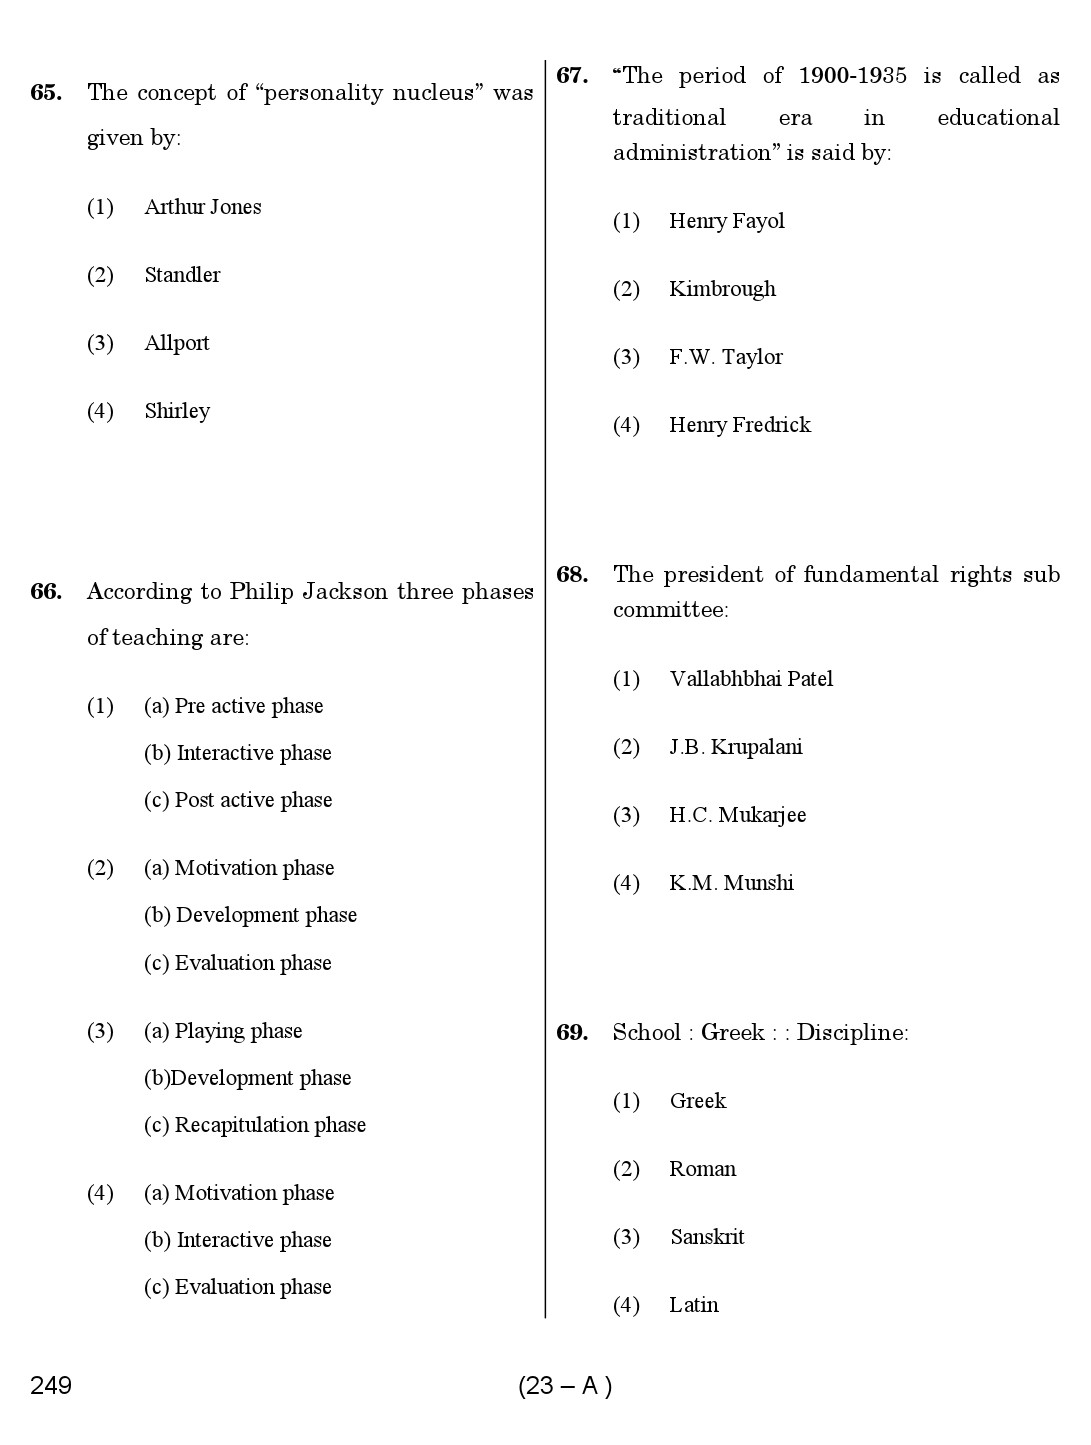 Karnataka PSC Principal Exam Sample Question Paper Subject code 249 23